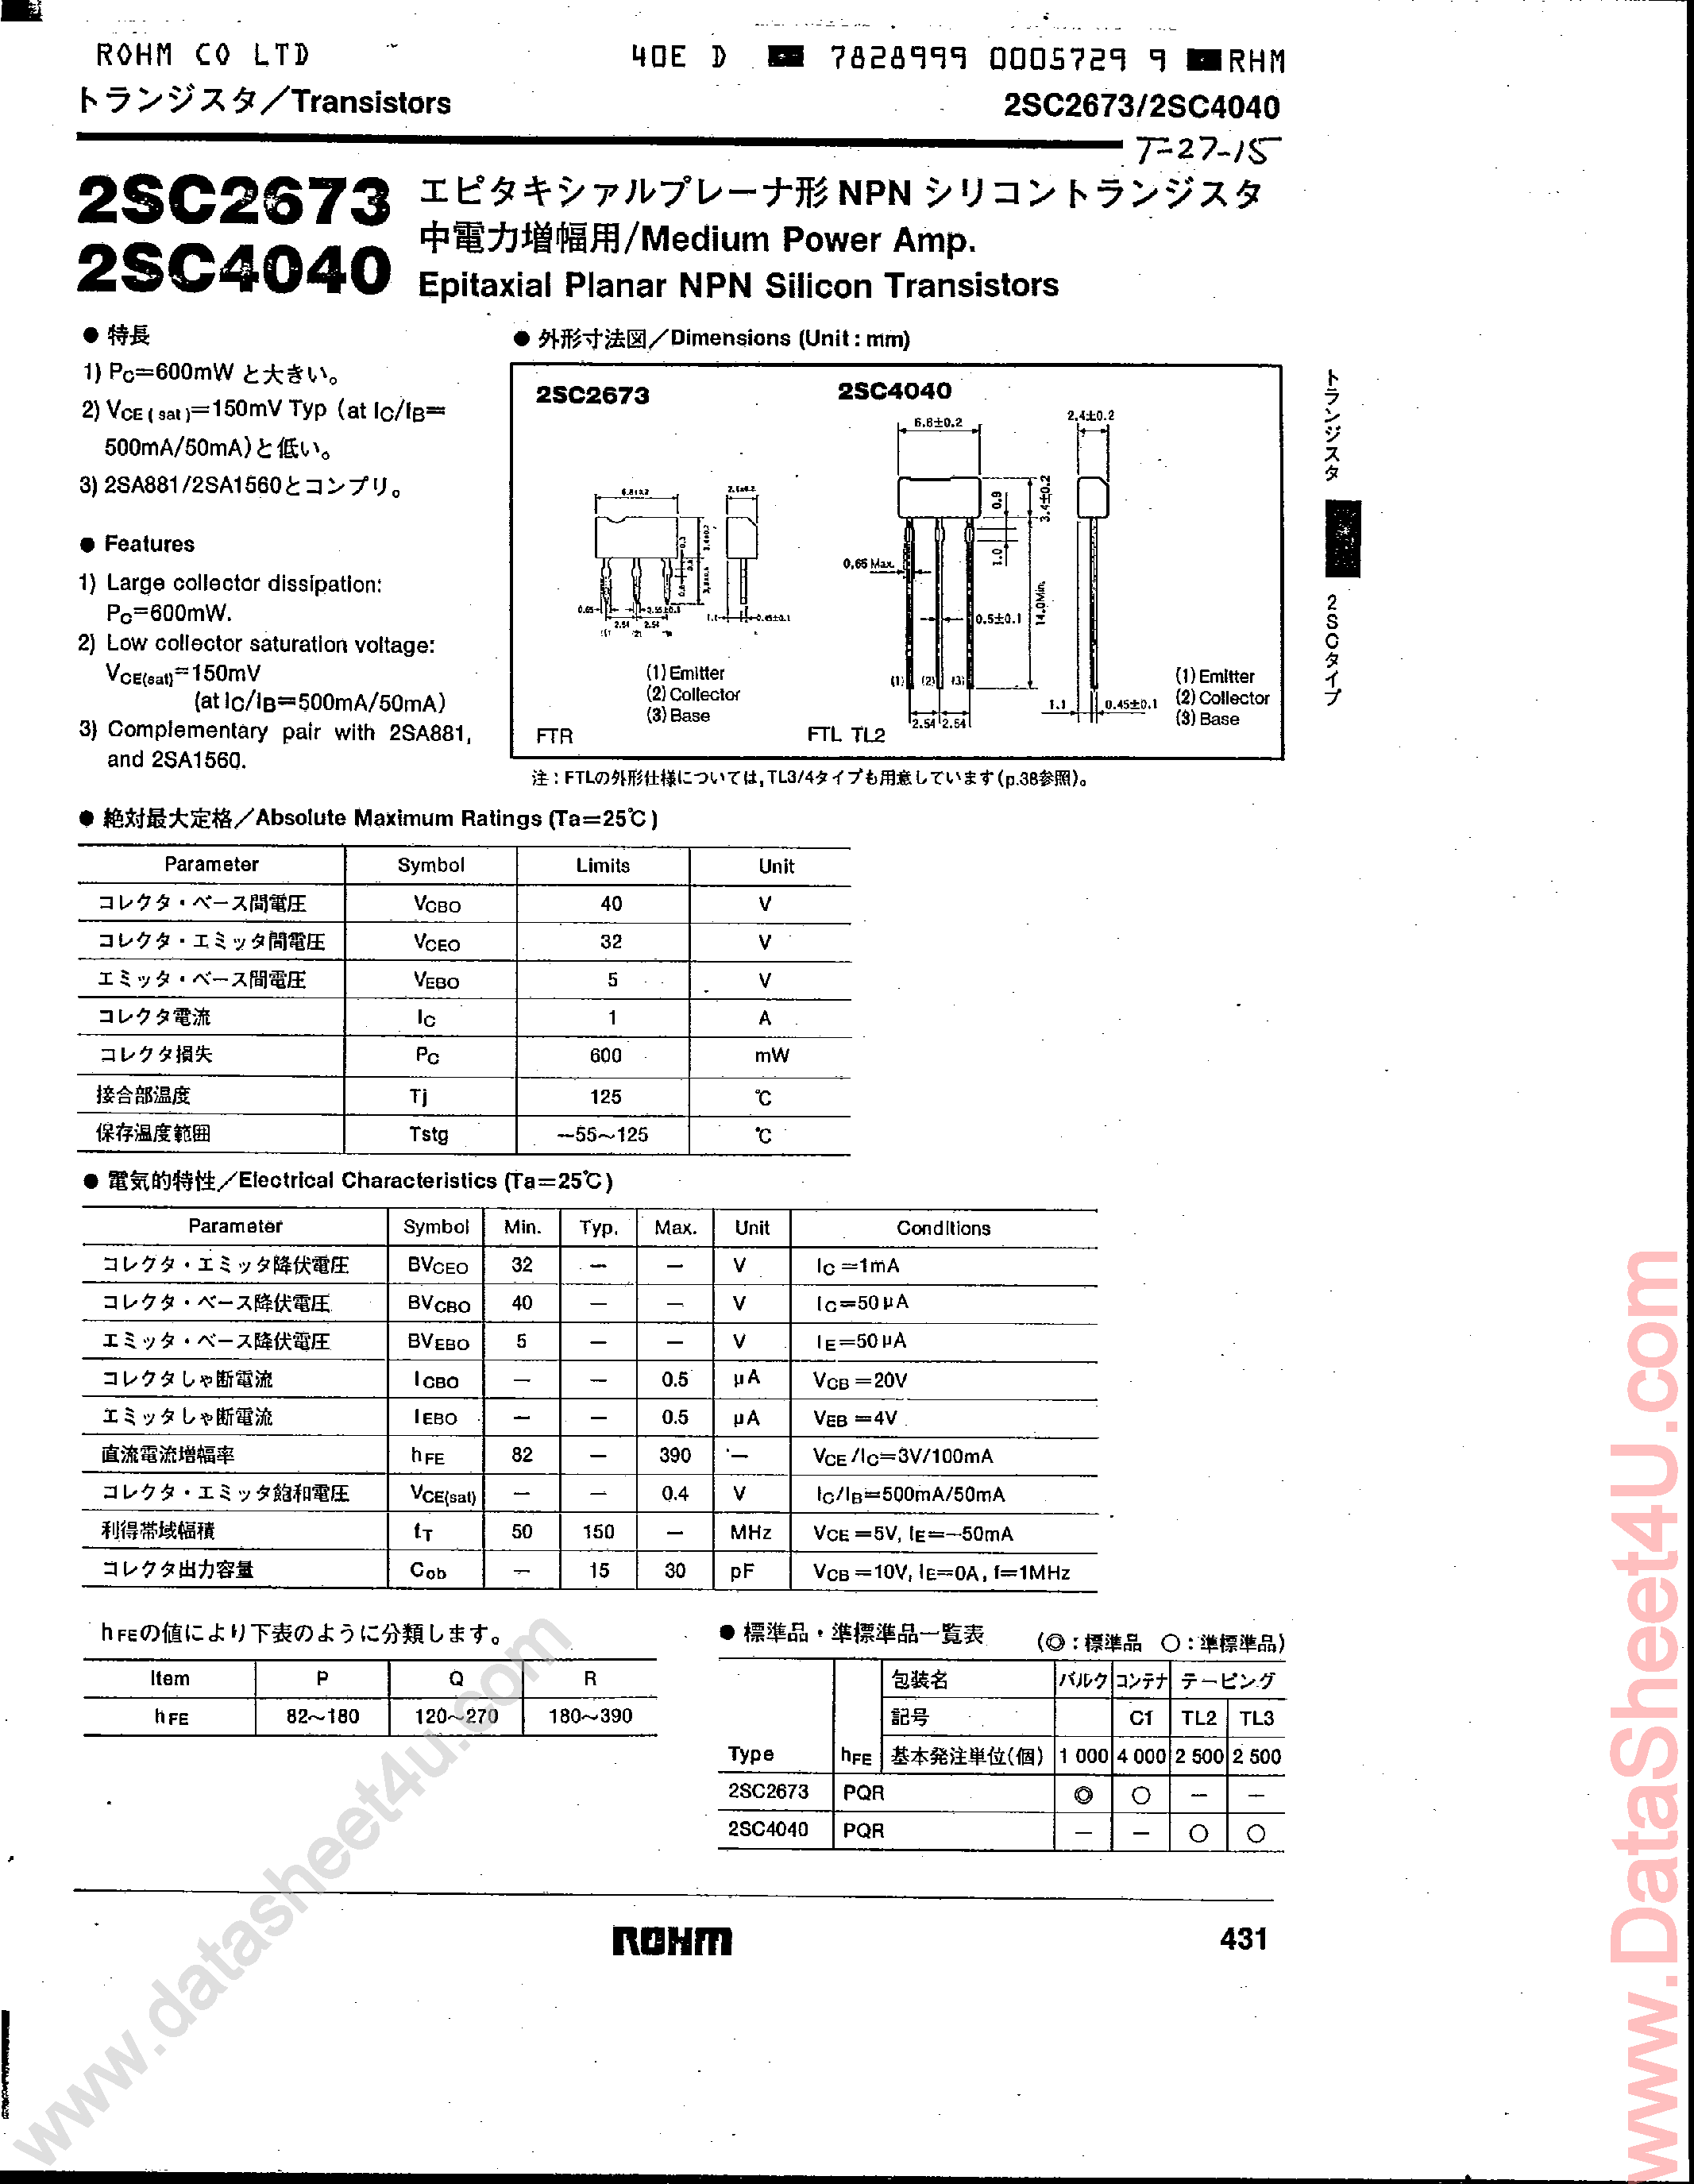 Datasheet 2SC2673 - (2SC4040 / 2SC2673) Medium Power Amp / NPN Silicon Transistors page 1